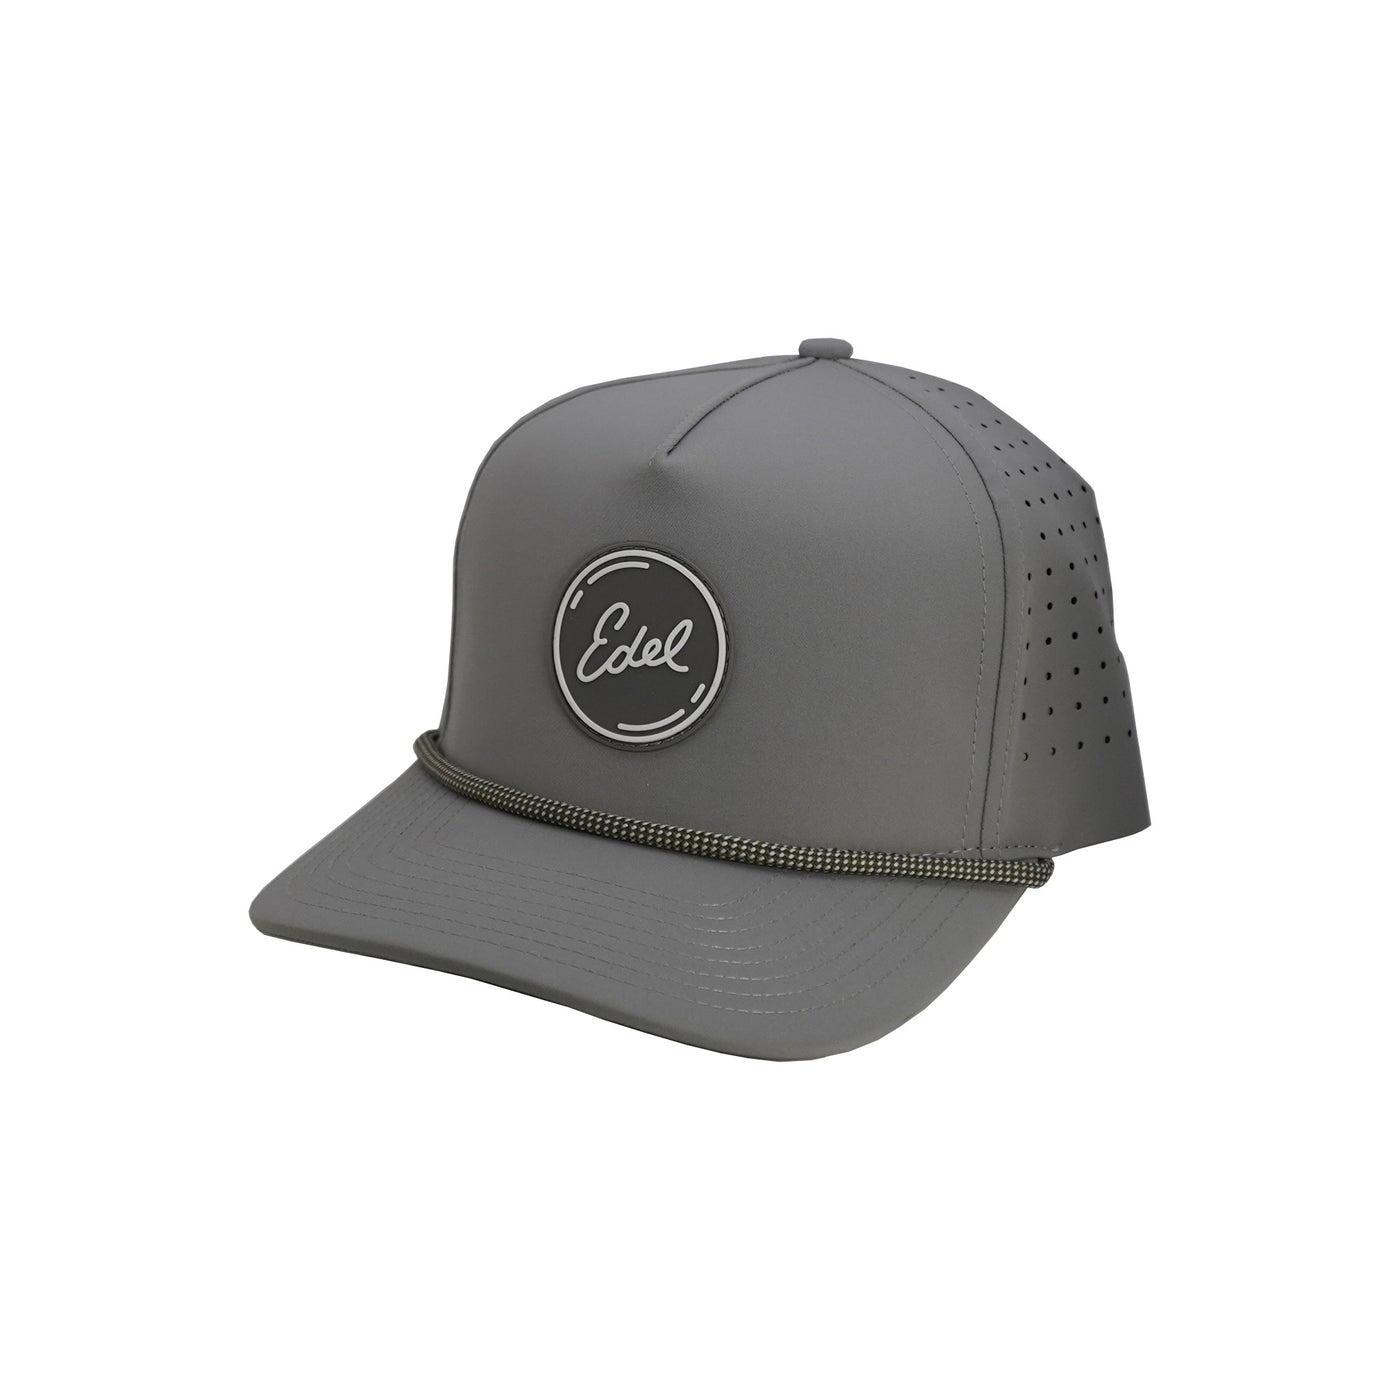 Edel Golf Signature Circle Rope Hat Grey - Front